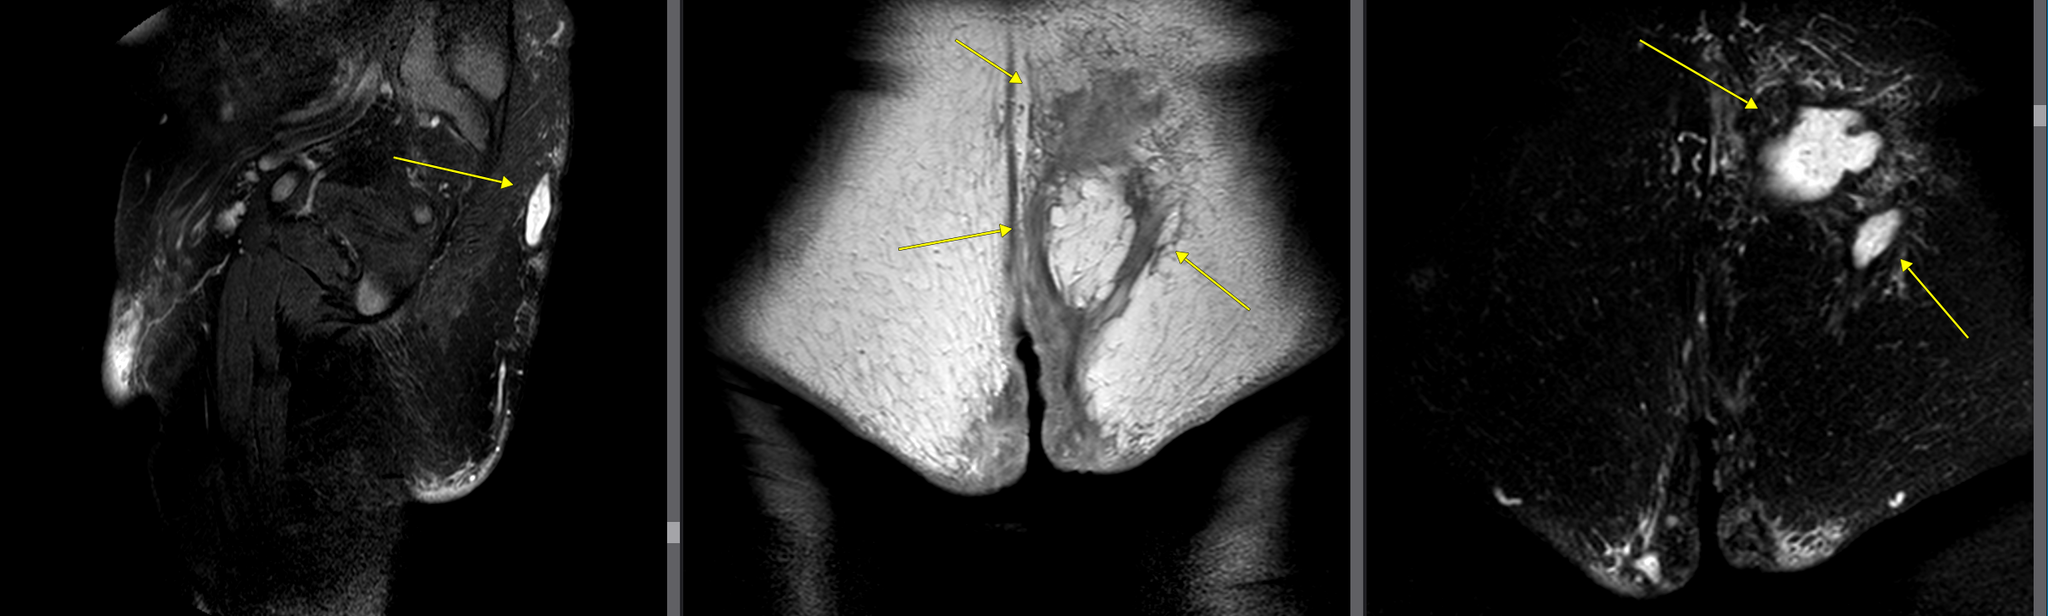 The wildest rectal fistula I've ever seen - My, Screenshot, Oddities, MRI, The medicine, Disease, Proctology, Fistula, Paraproctitis rectal fistula, Longpost